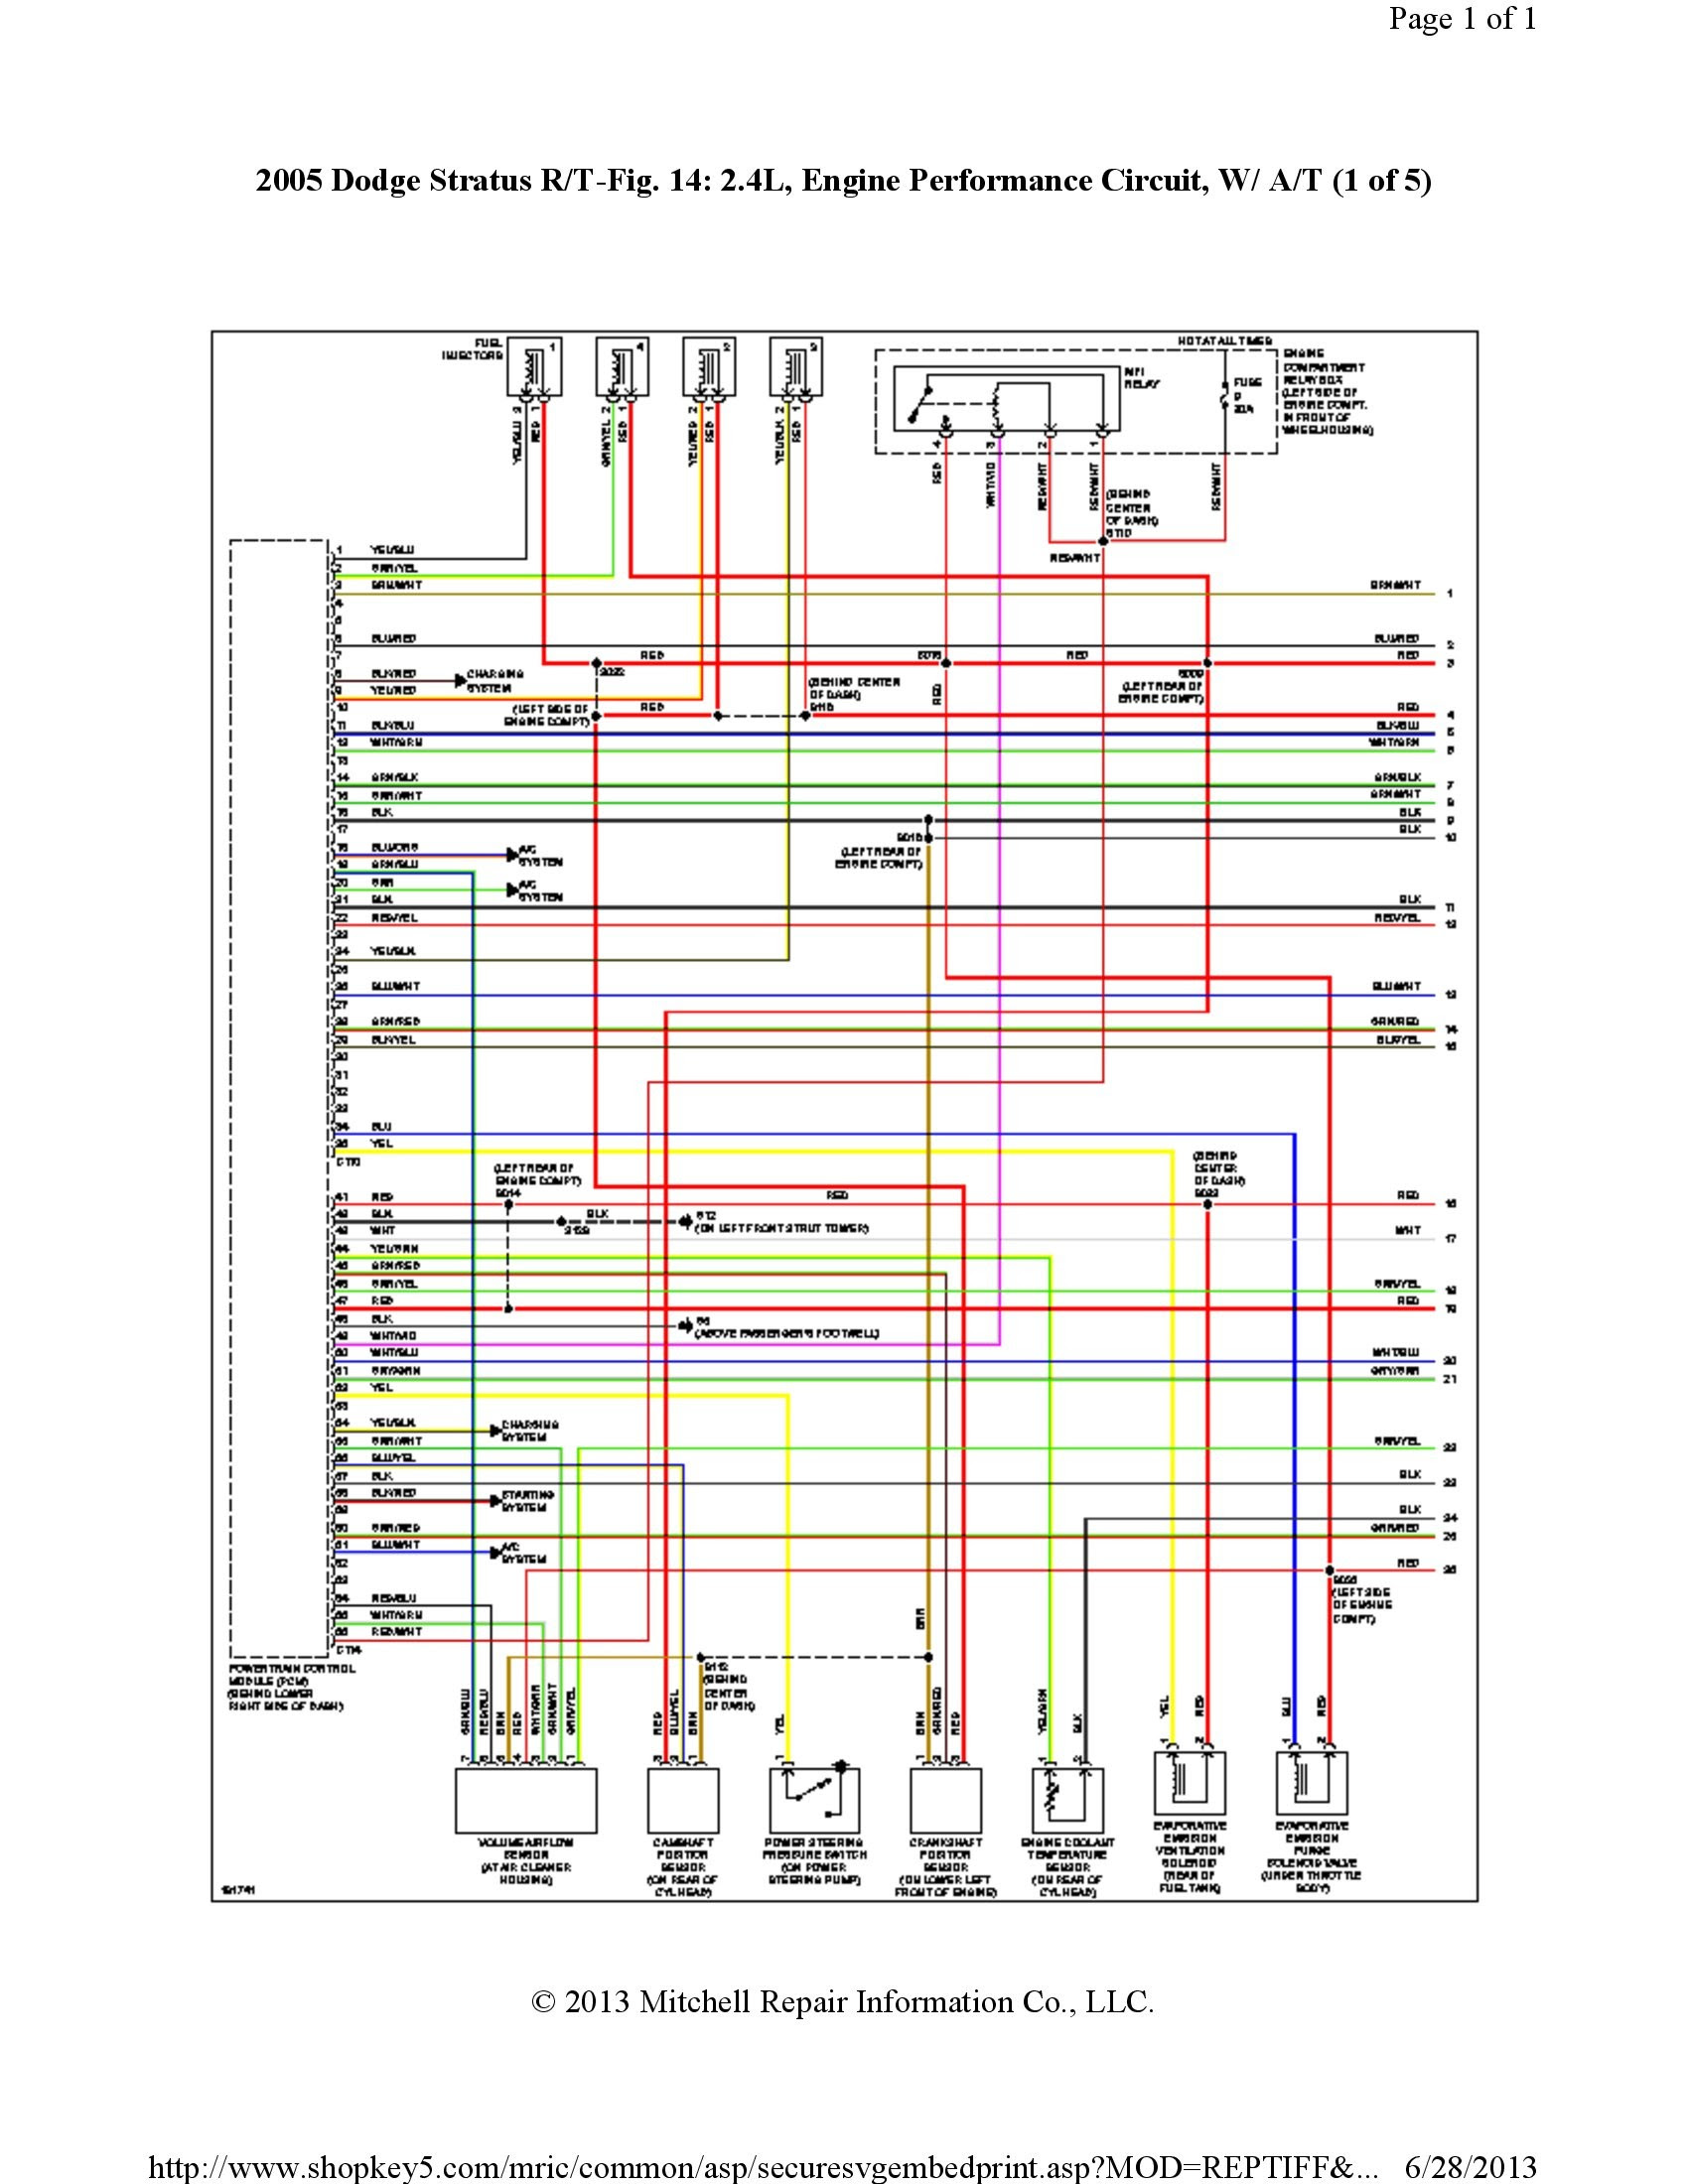 Radio Wiring Diagram For 2000 Durango - Wiring Diagram